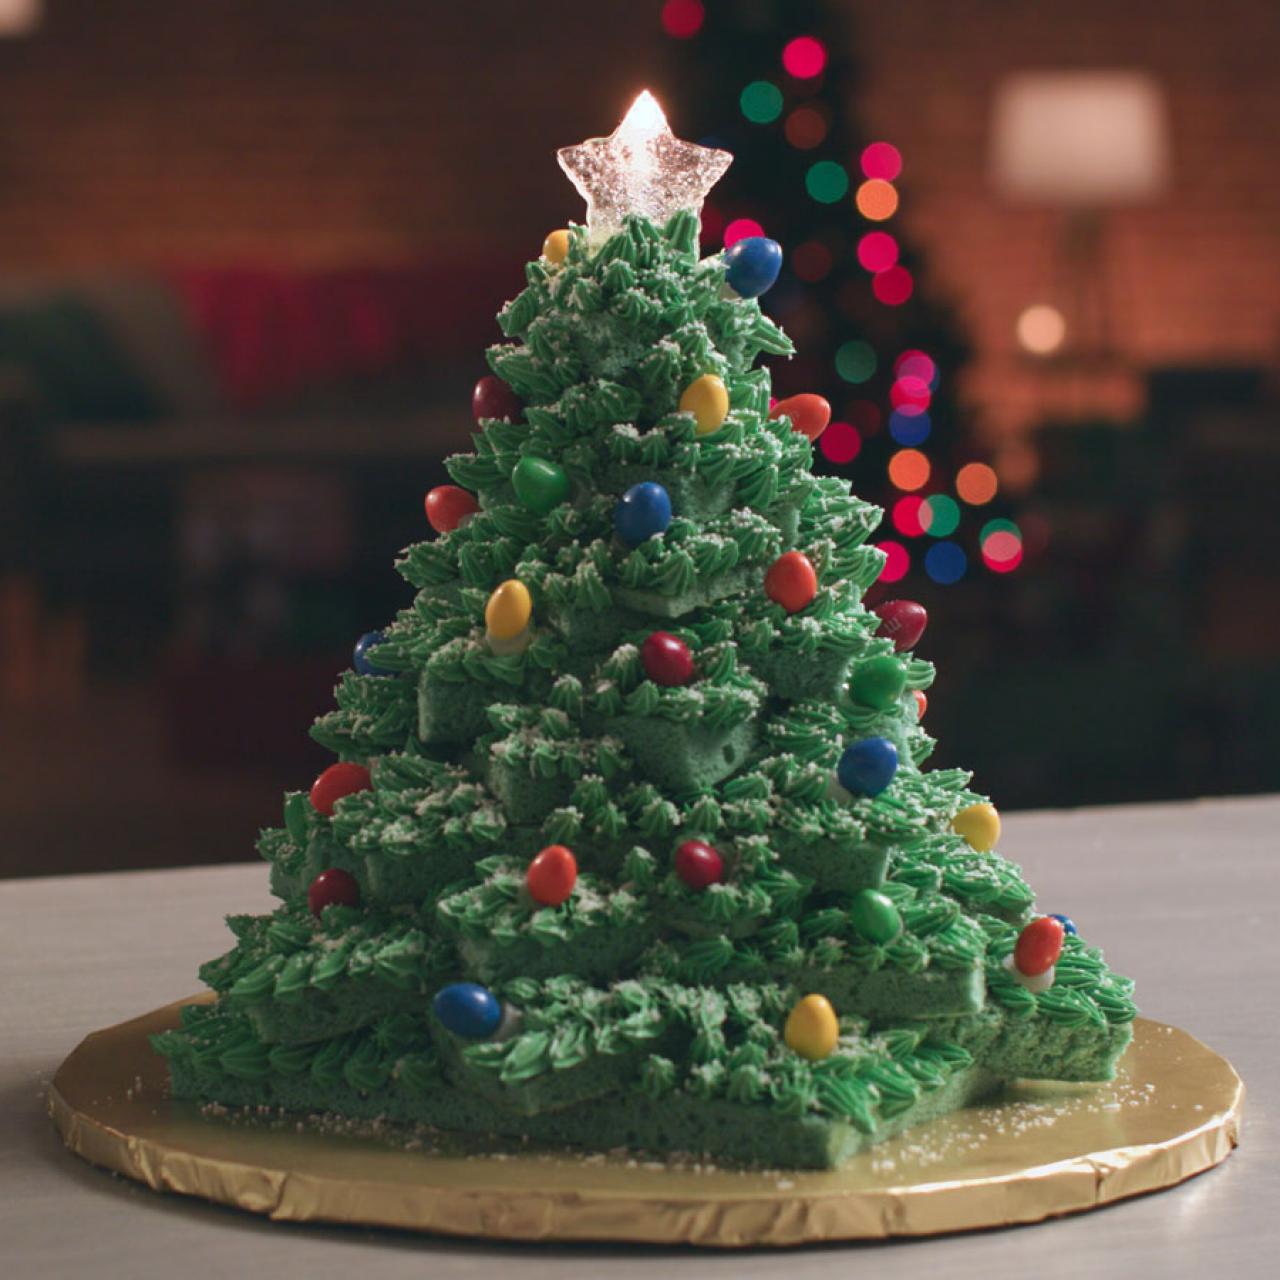 https://food.fnr.sndimg.com/content/dam/images/food/fullset/2018/10/5/0/5227911_FN_Holiday-2018_Christmas-Tree-Cake-_4X3.jpg.rend.hgtvcom.1280.1280.suffix/1538777241478.jpeg